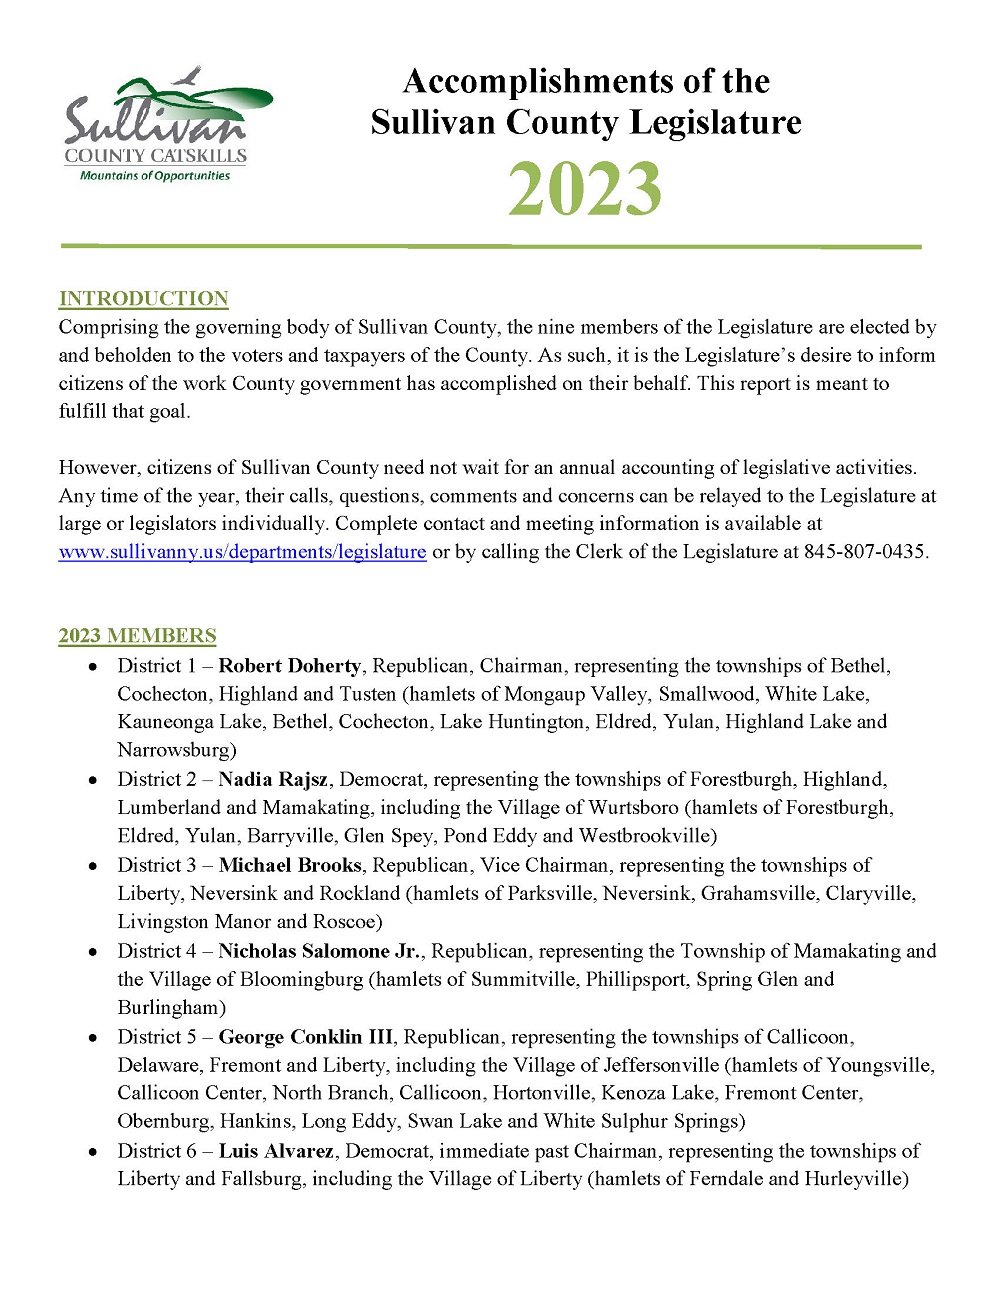 2023 Legislature Accomplishments - Page 1